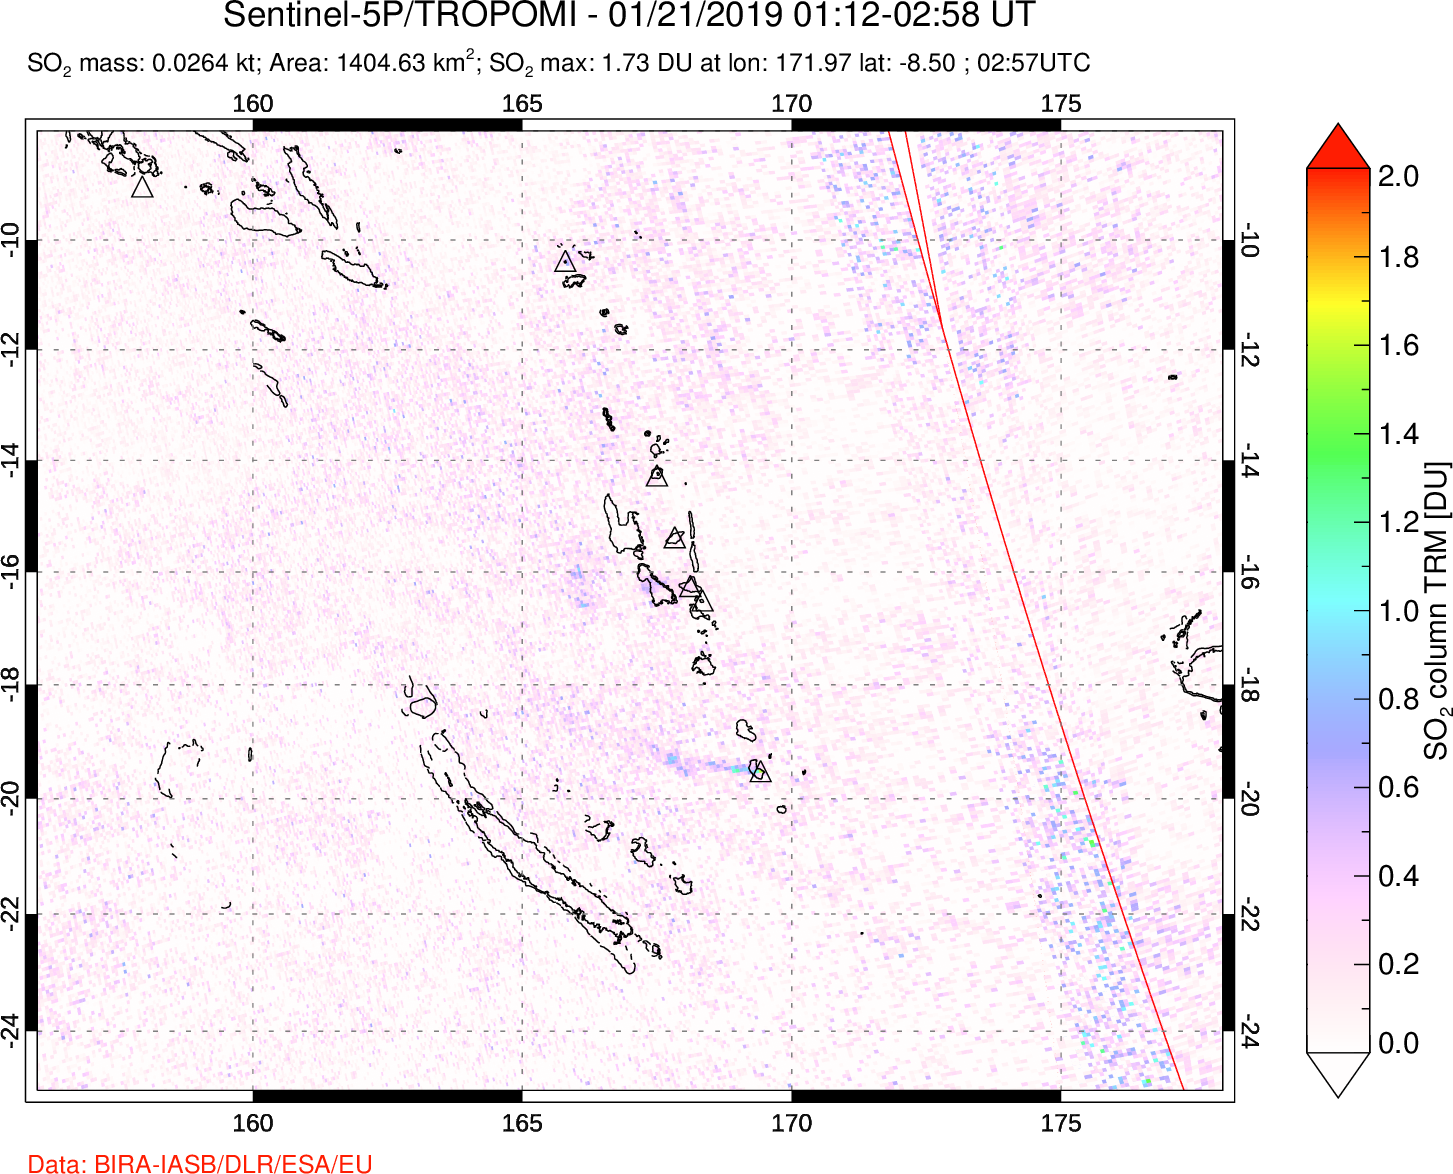 A sulfur dioxide image over Vanuatu, South Pacific on Jan 21, 2019.